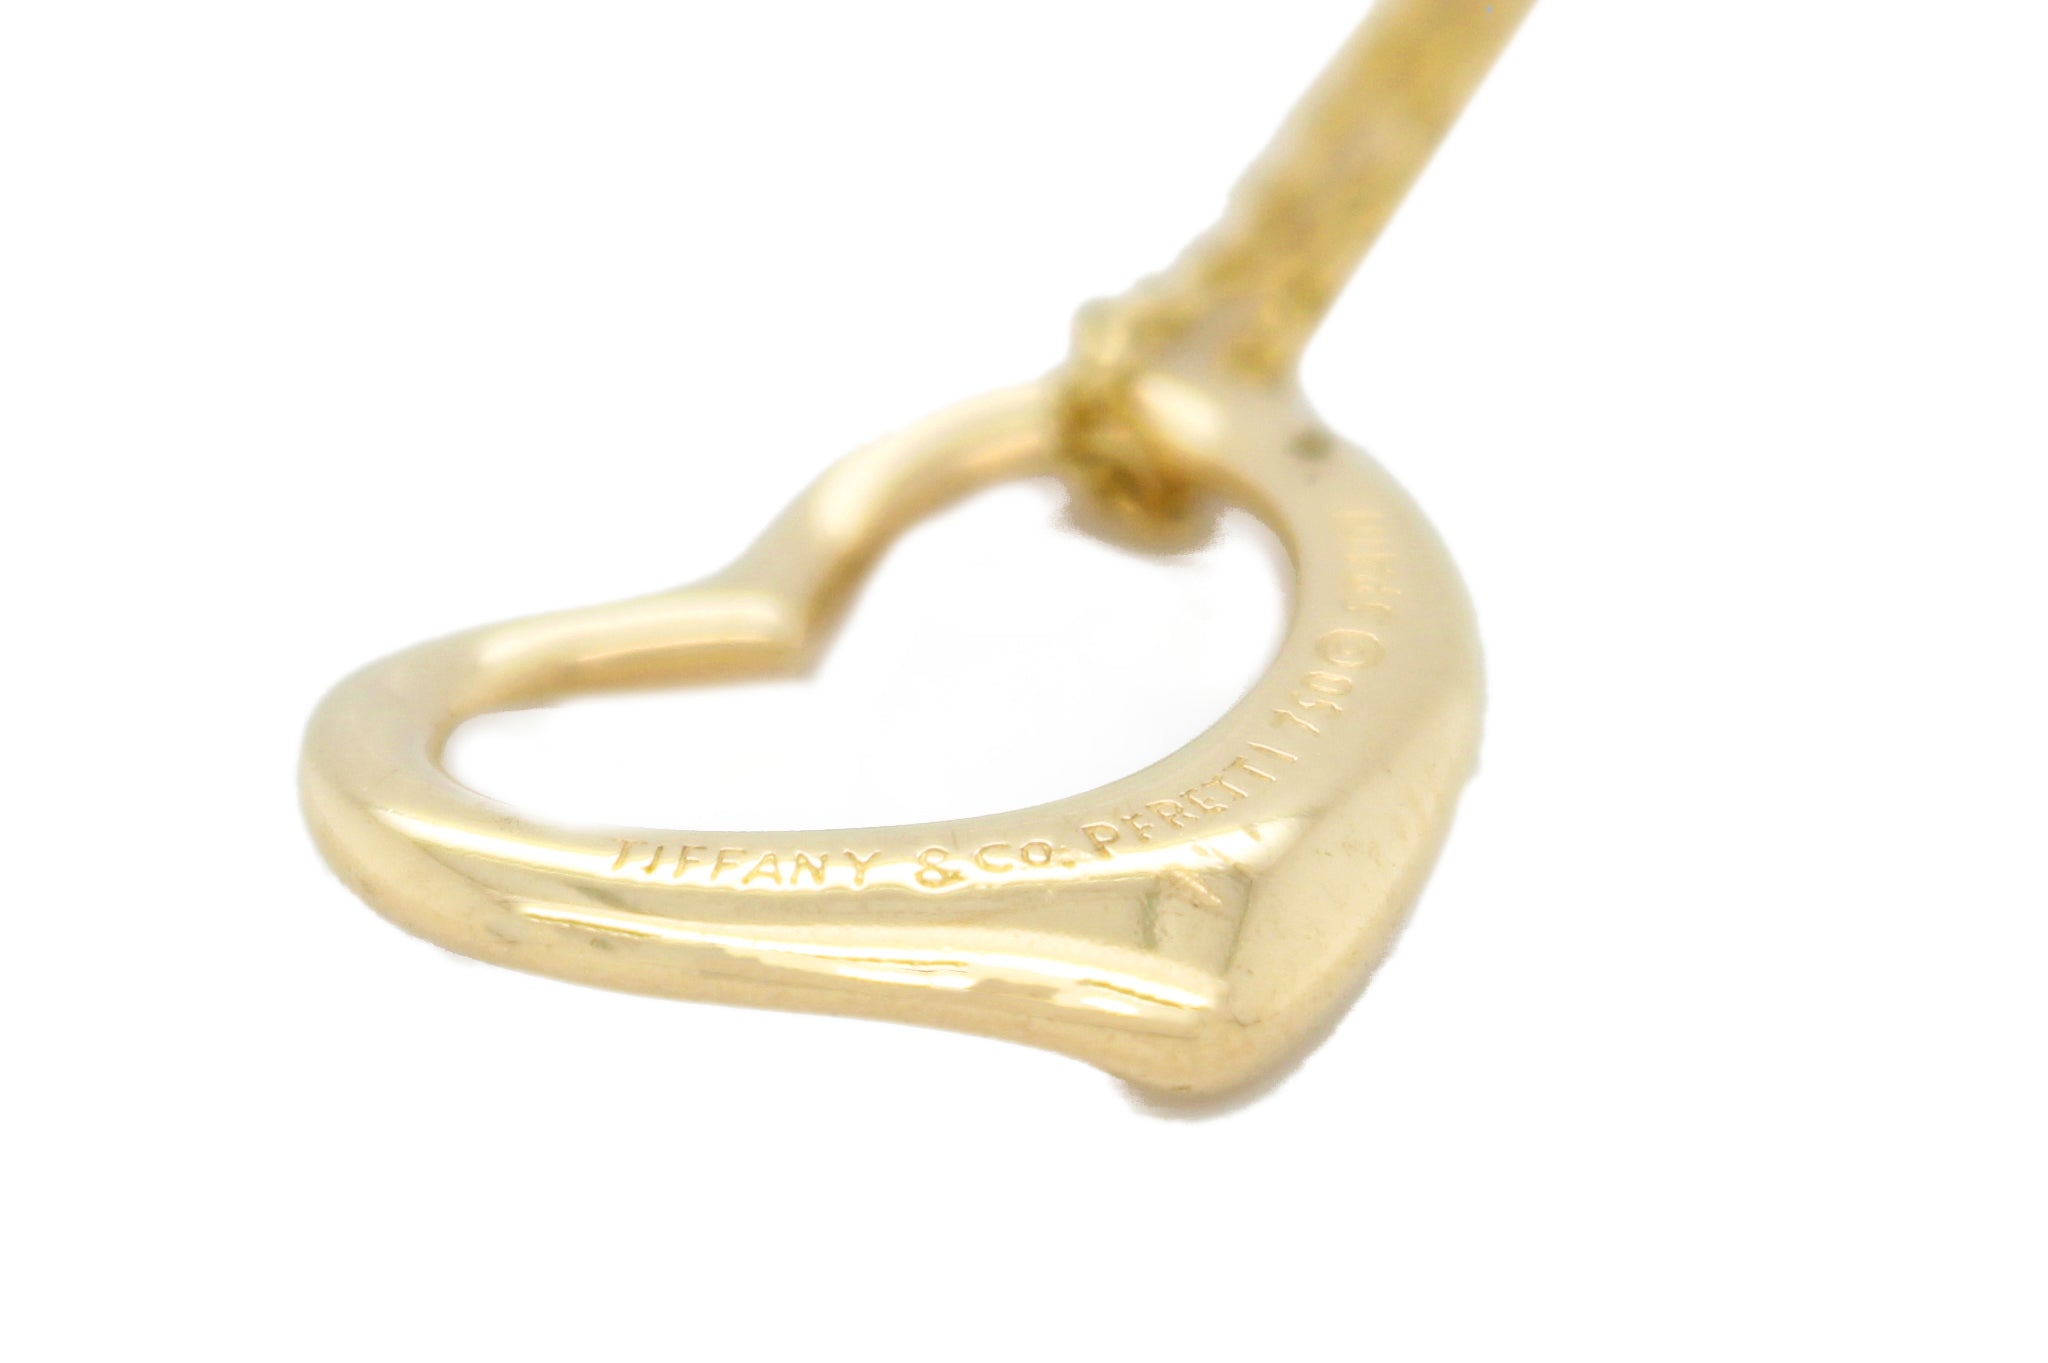 Tiffany & Co. Elsa Peretti 18K Yellow Gold 11mm Open Heart Pendant Necklace 16